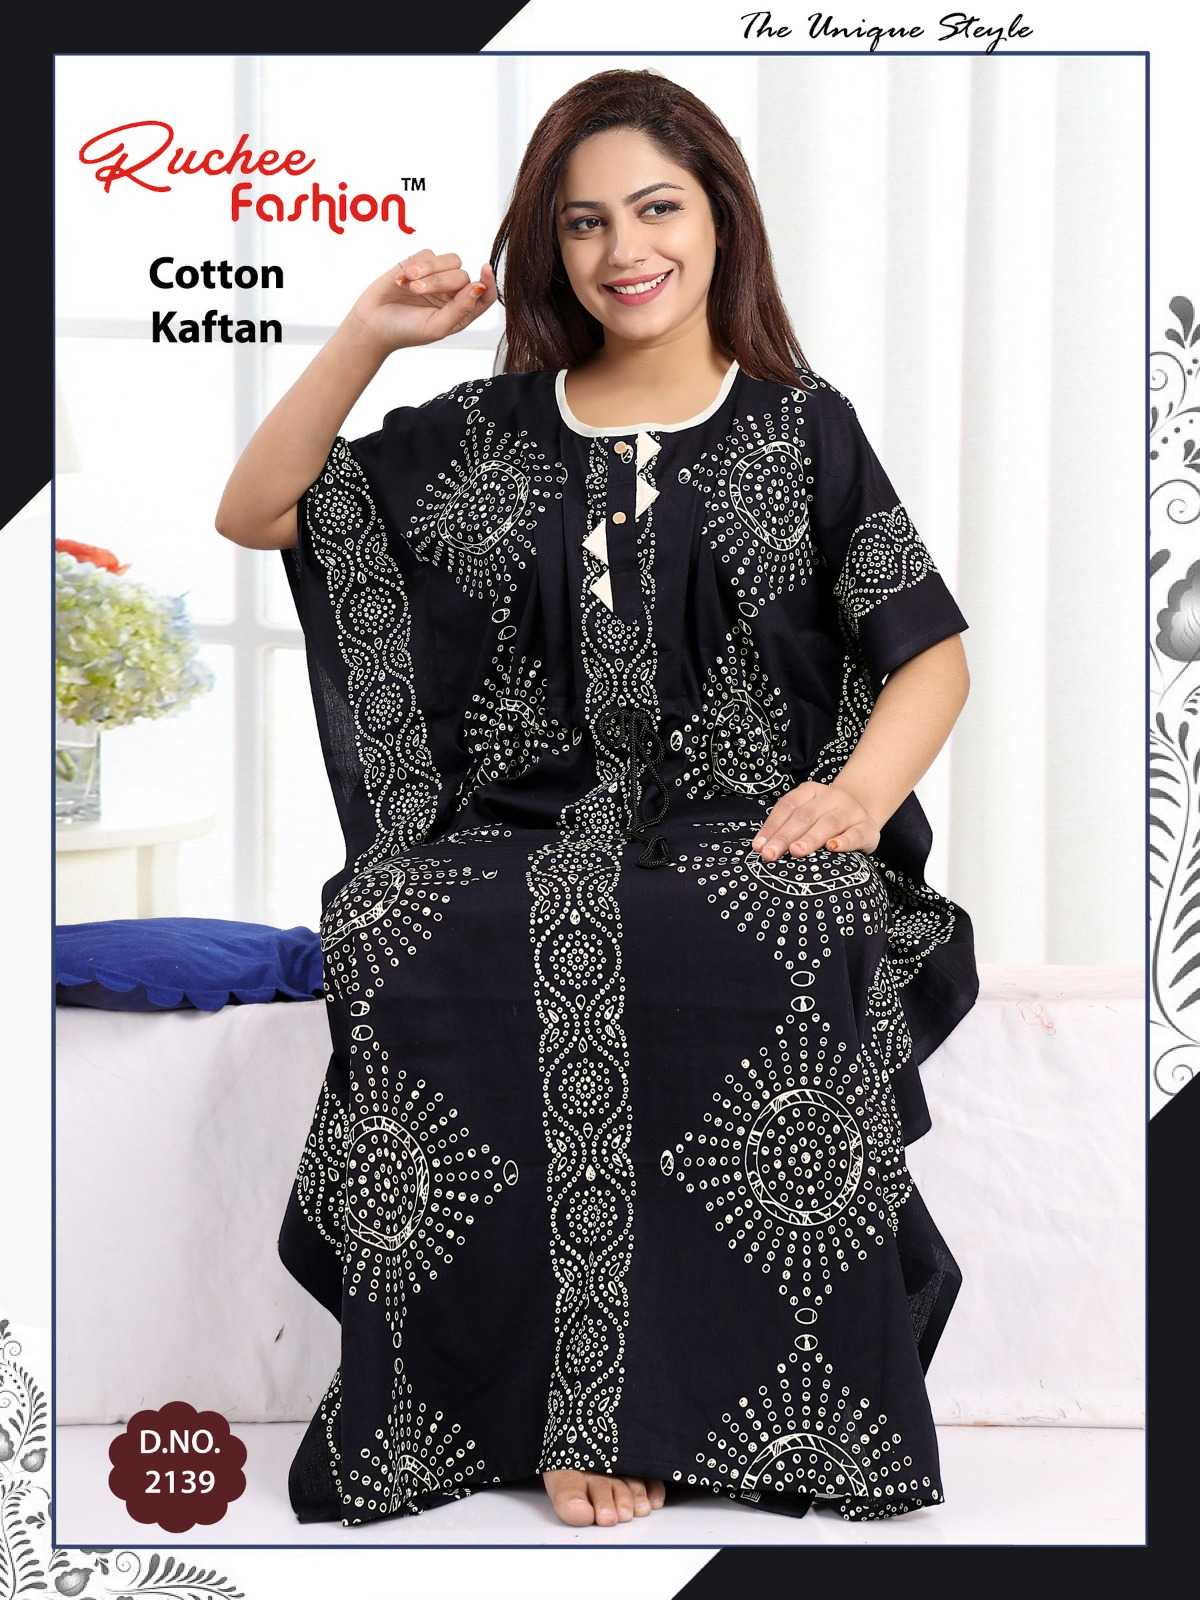 ruchee fashion cotton kaftan 2133-2140 stylish gown